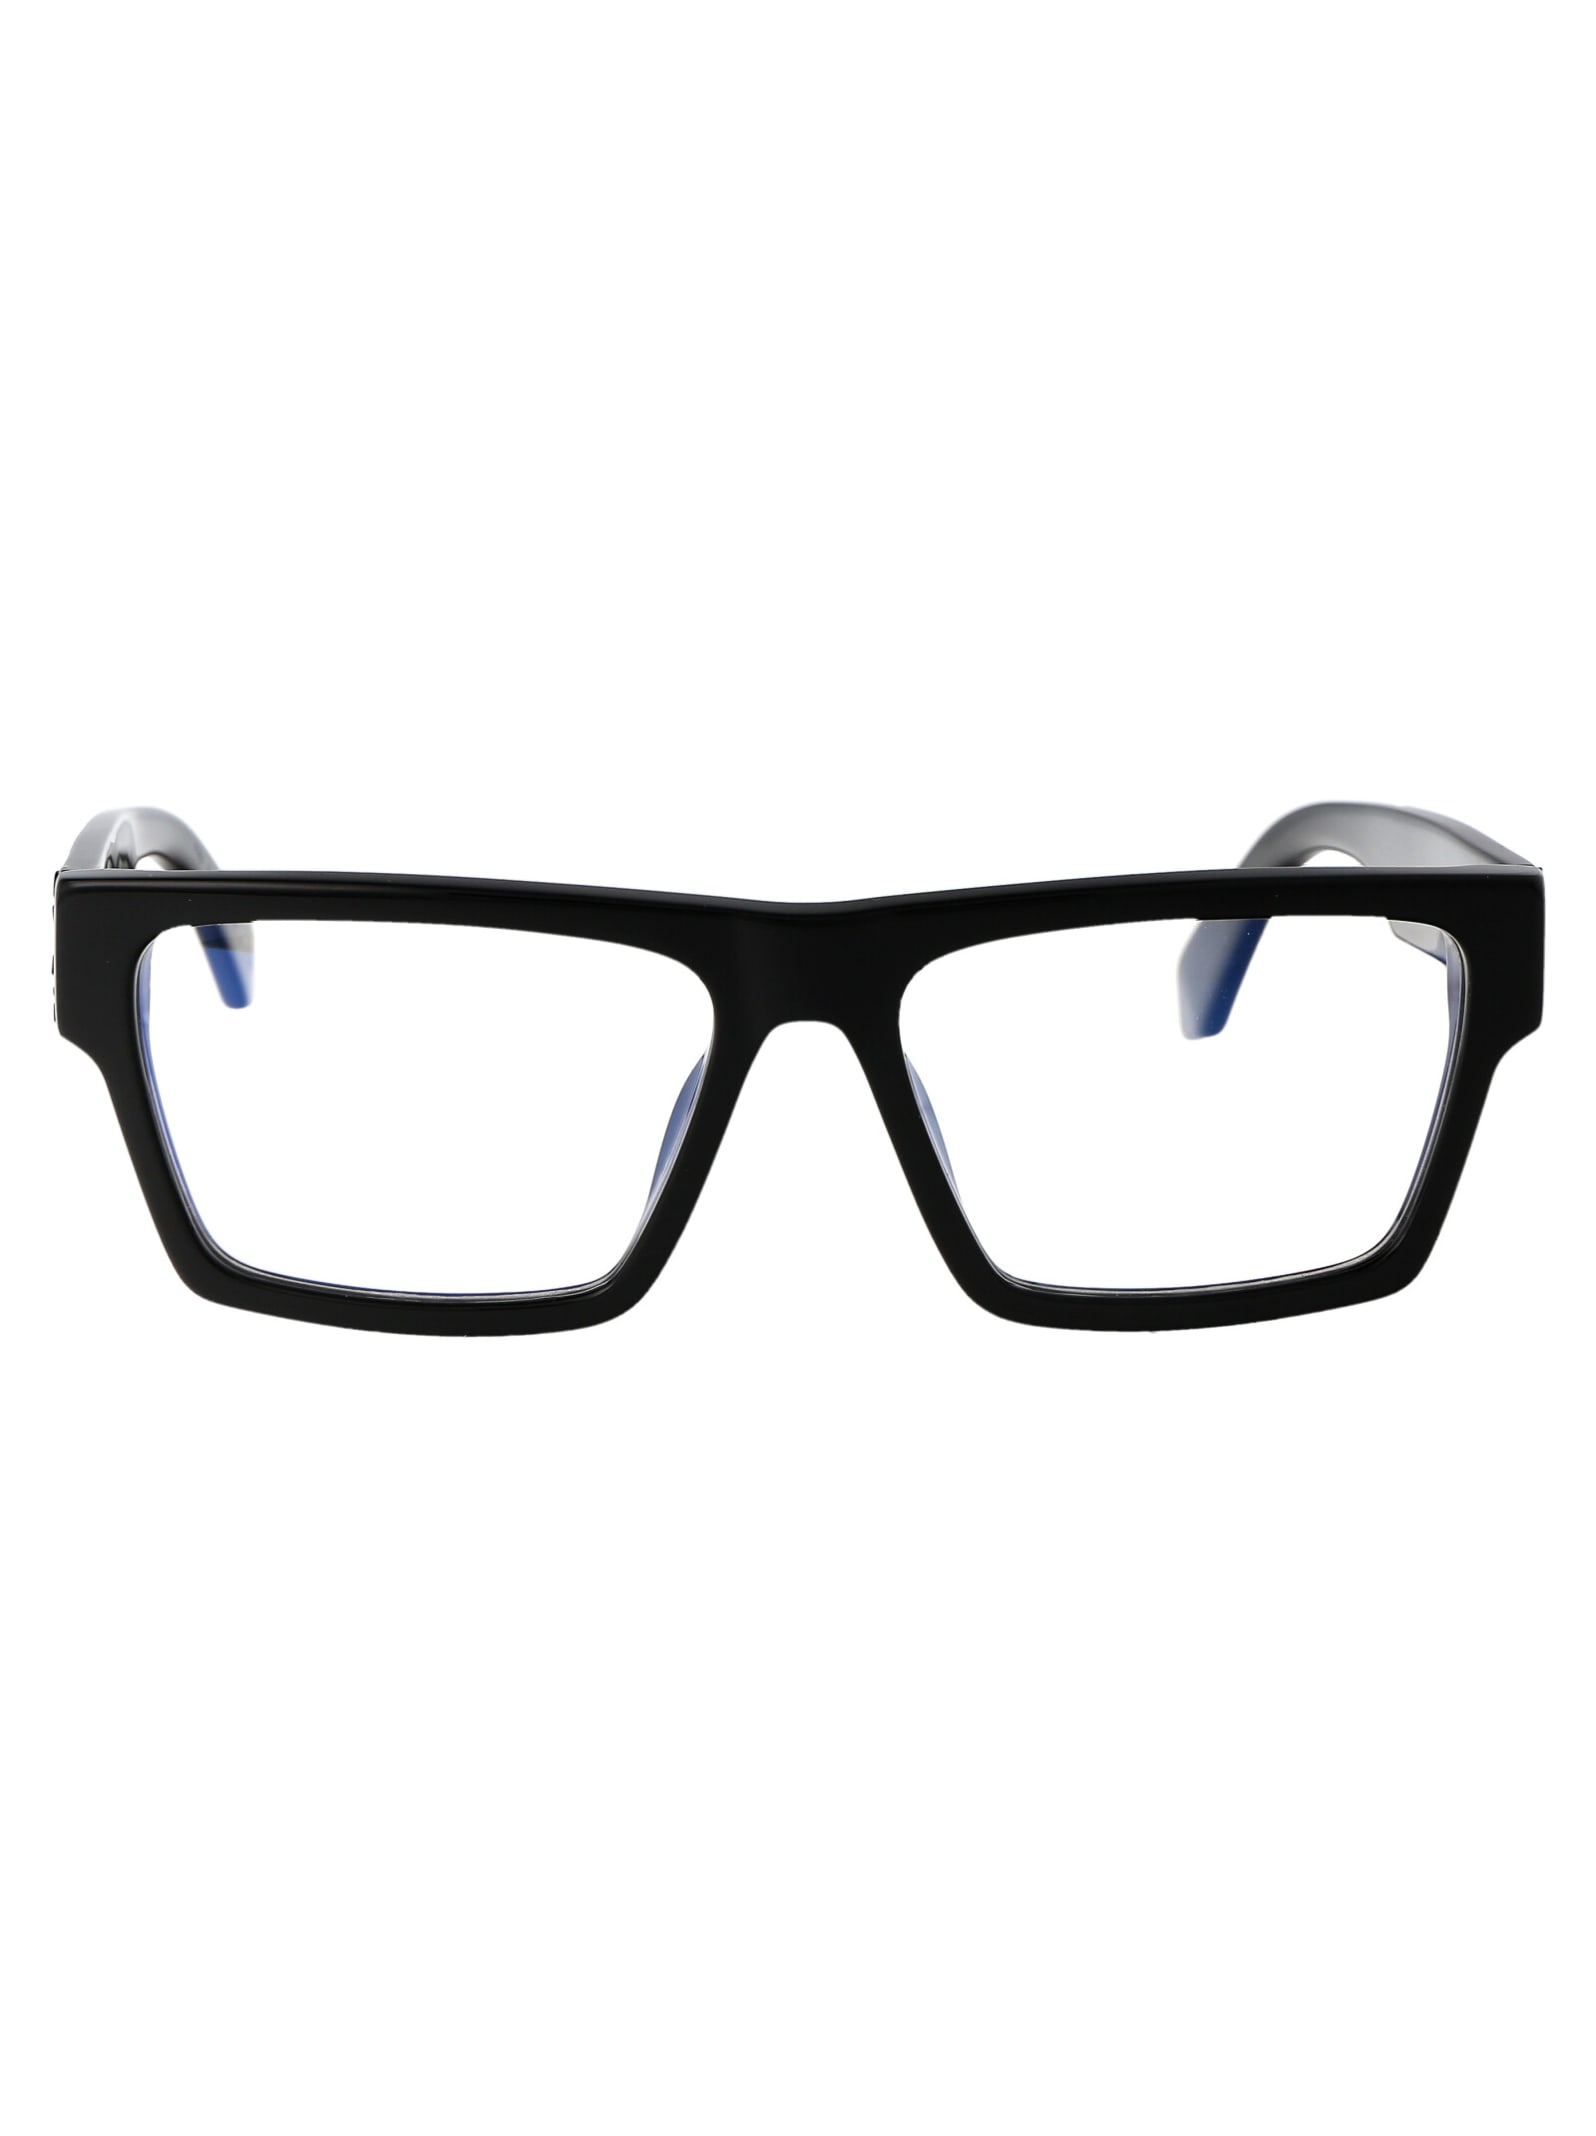 Optical Style 46 Glasses